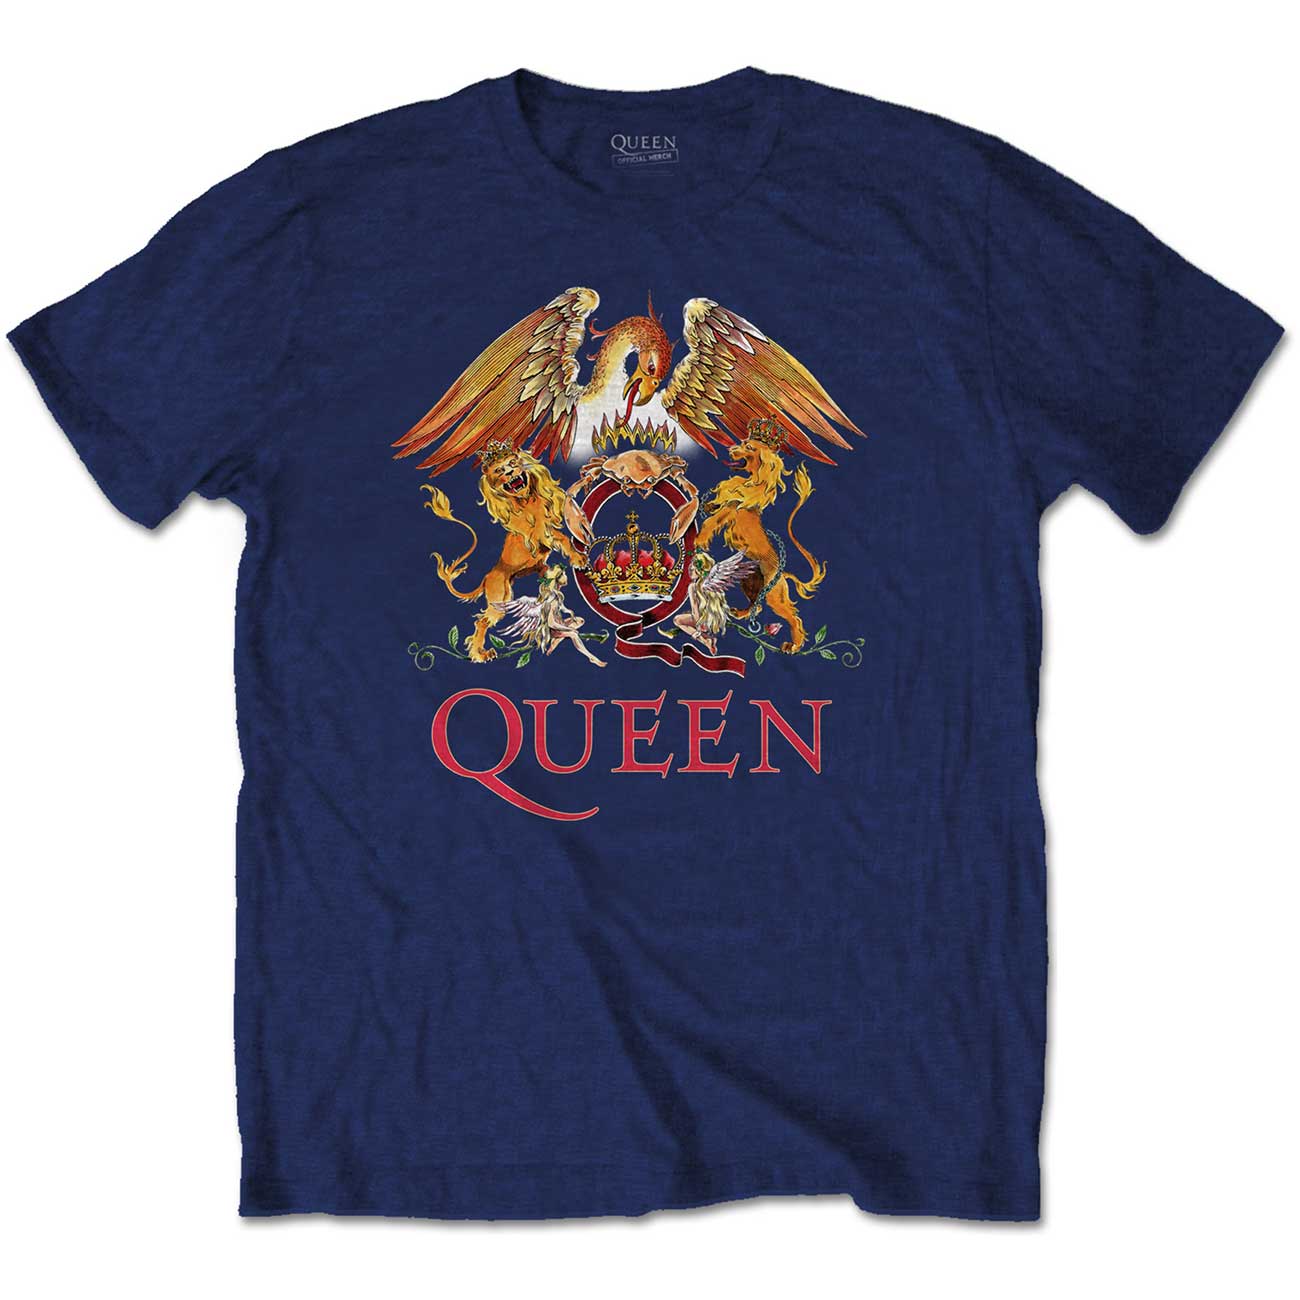 Queen - Classic Crest Navy (Large)